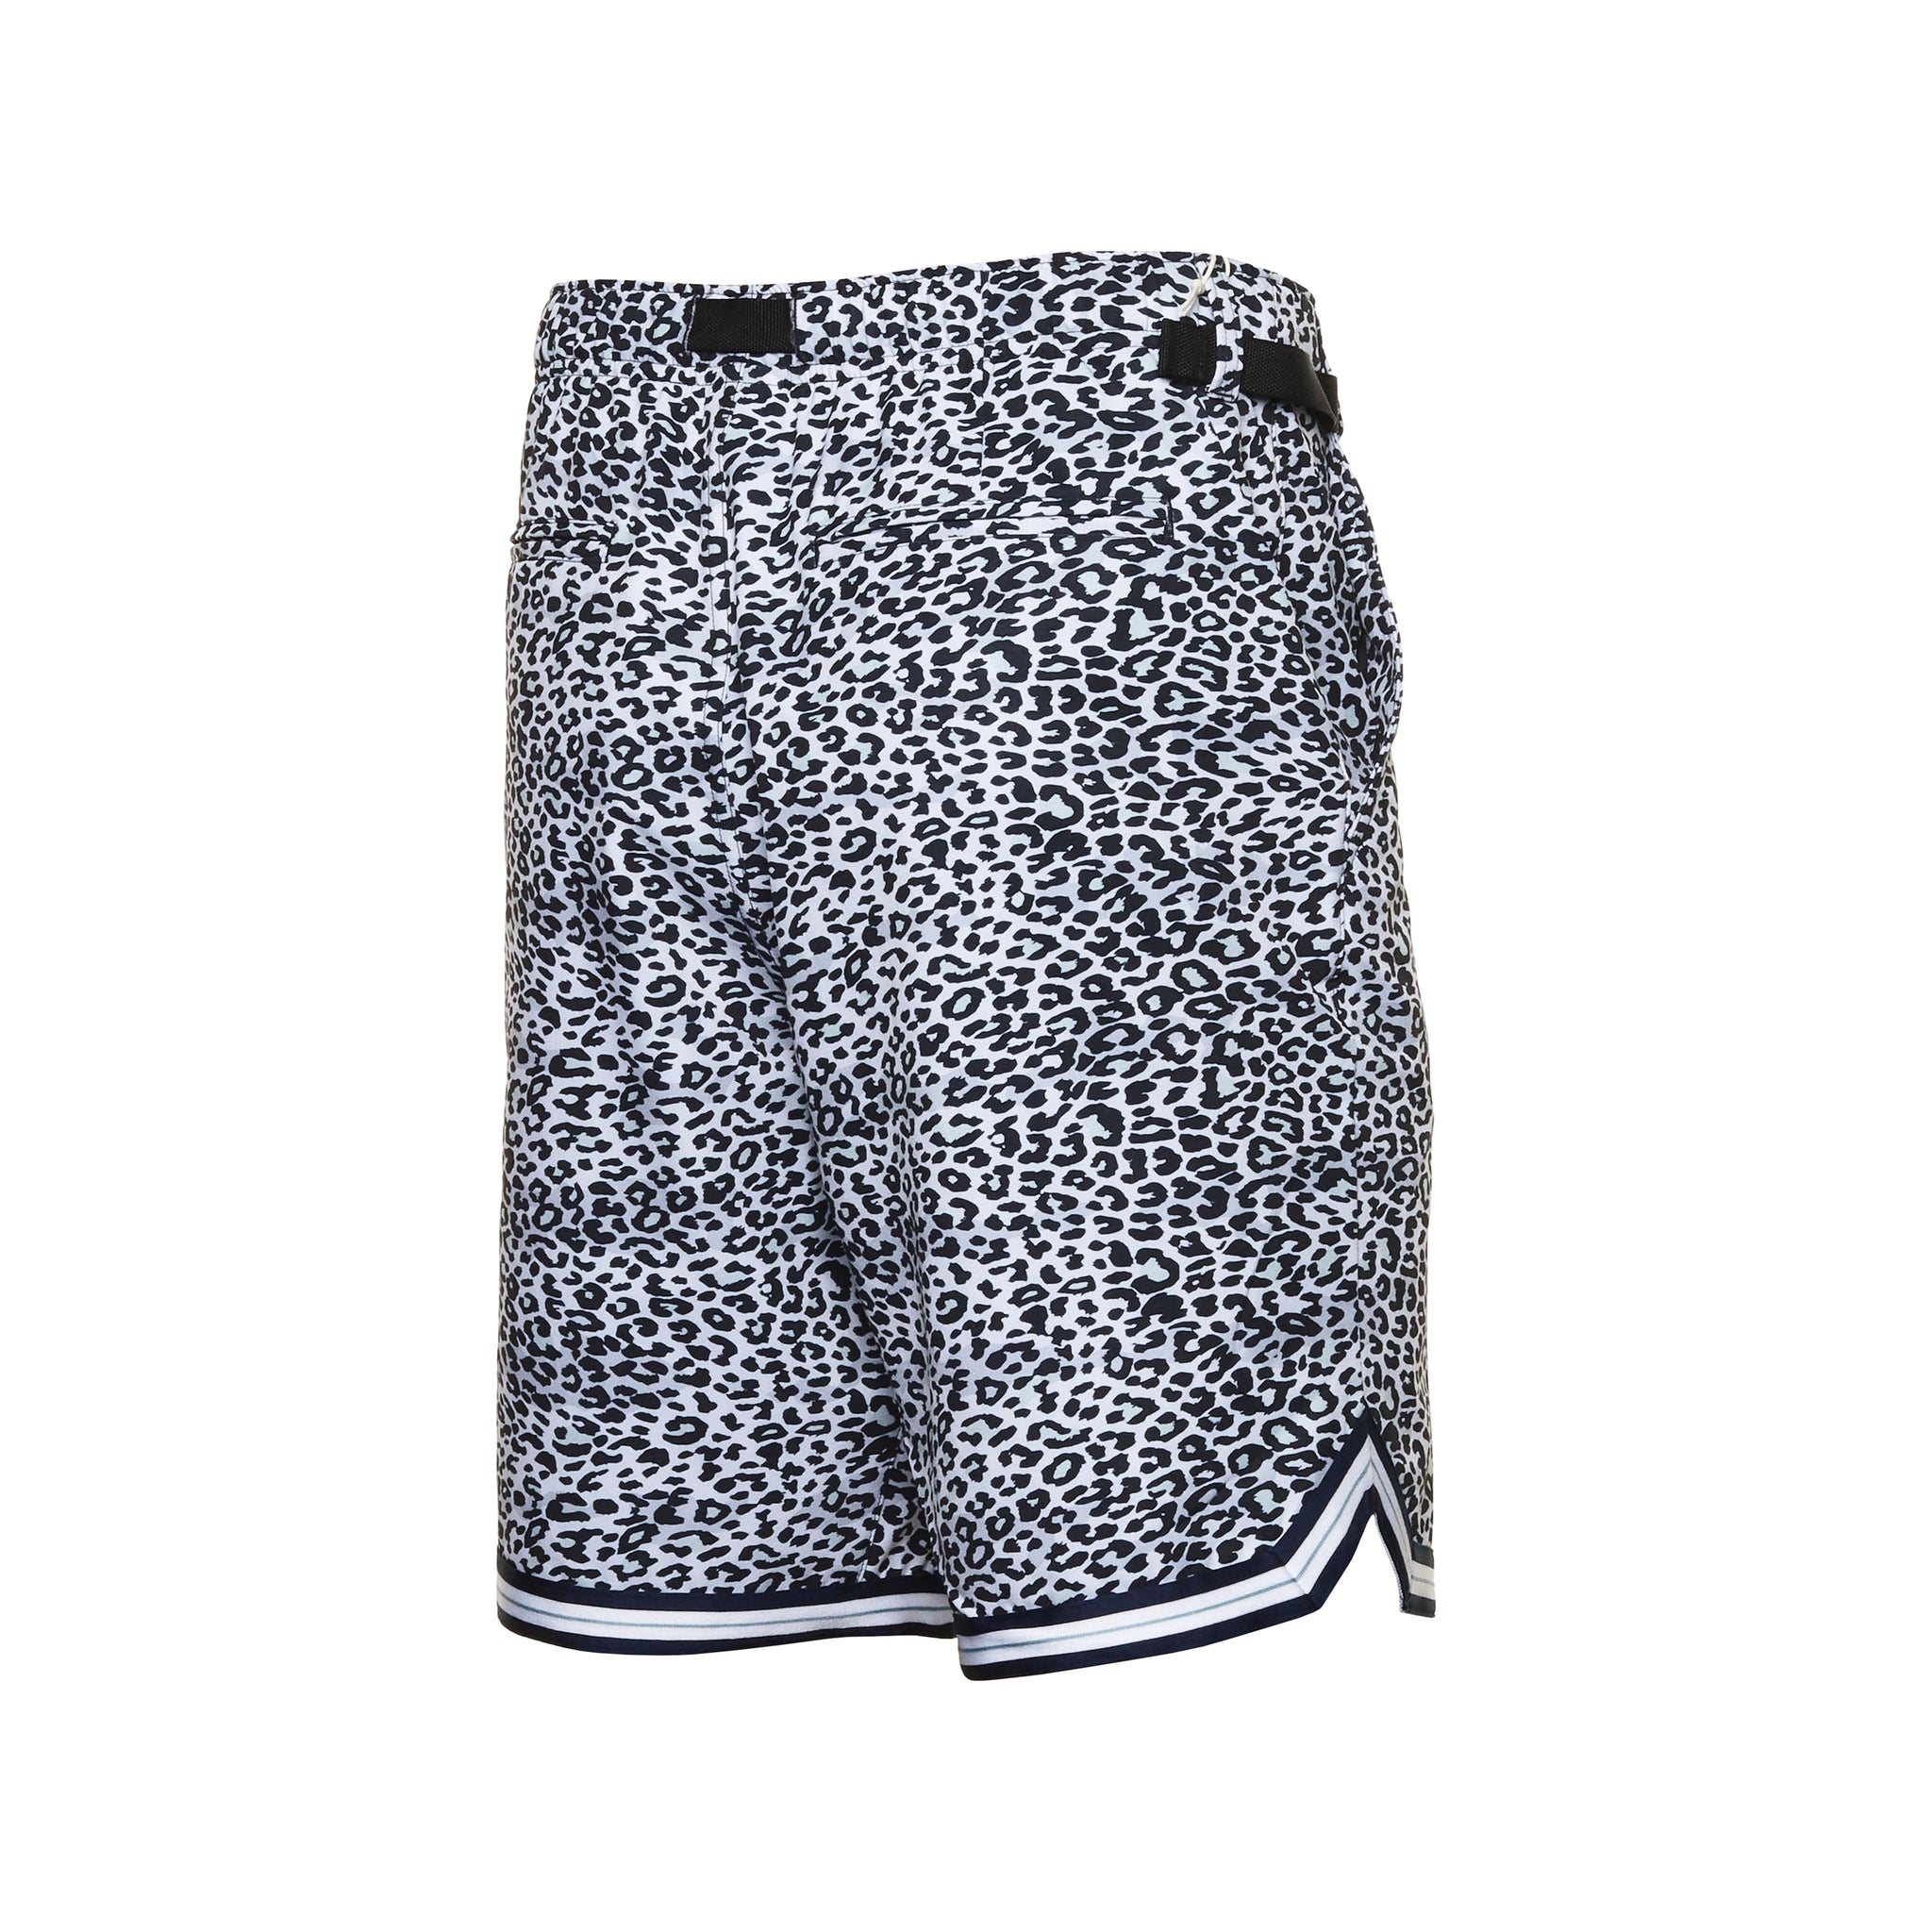 adidas-golf-adicross-printed-shorts-it8310-black